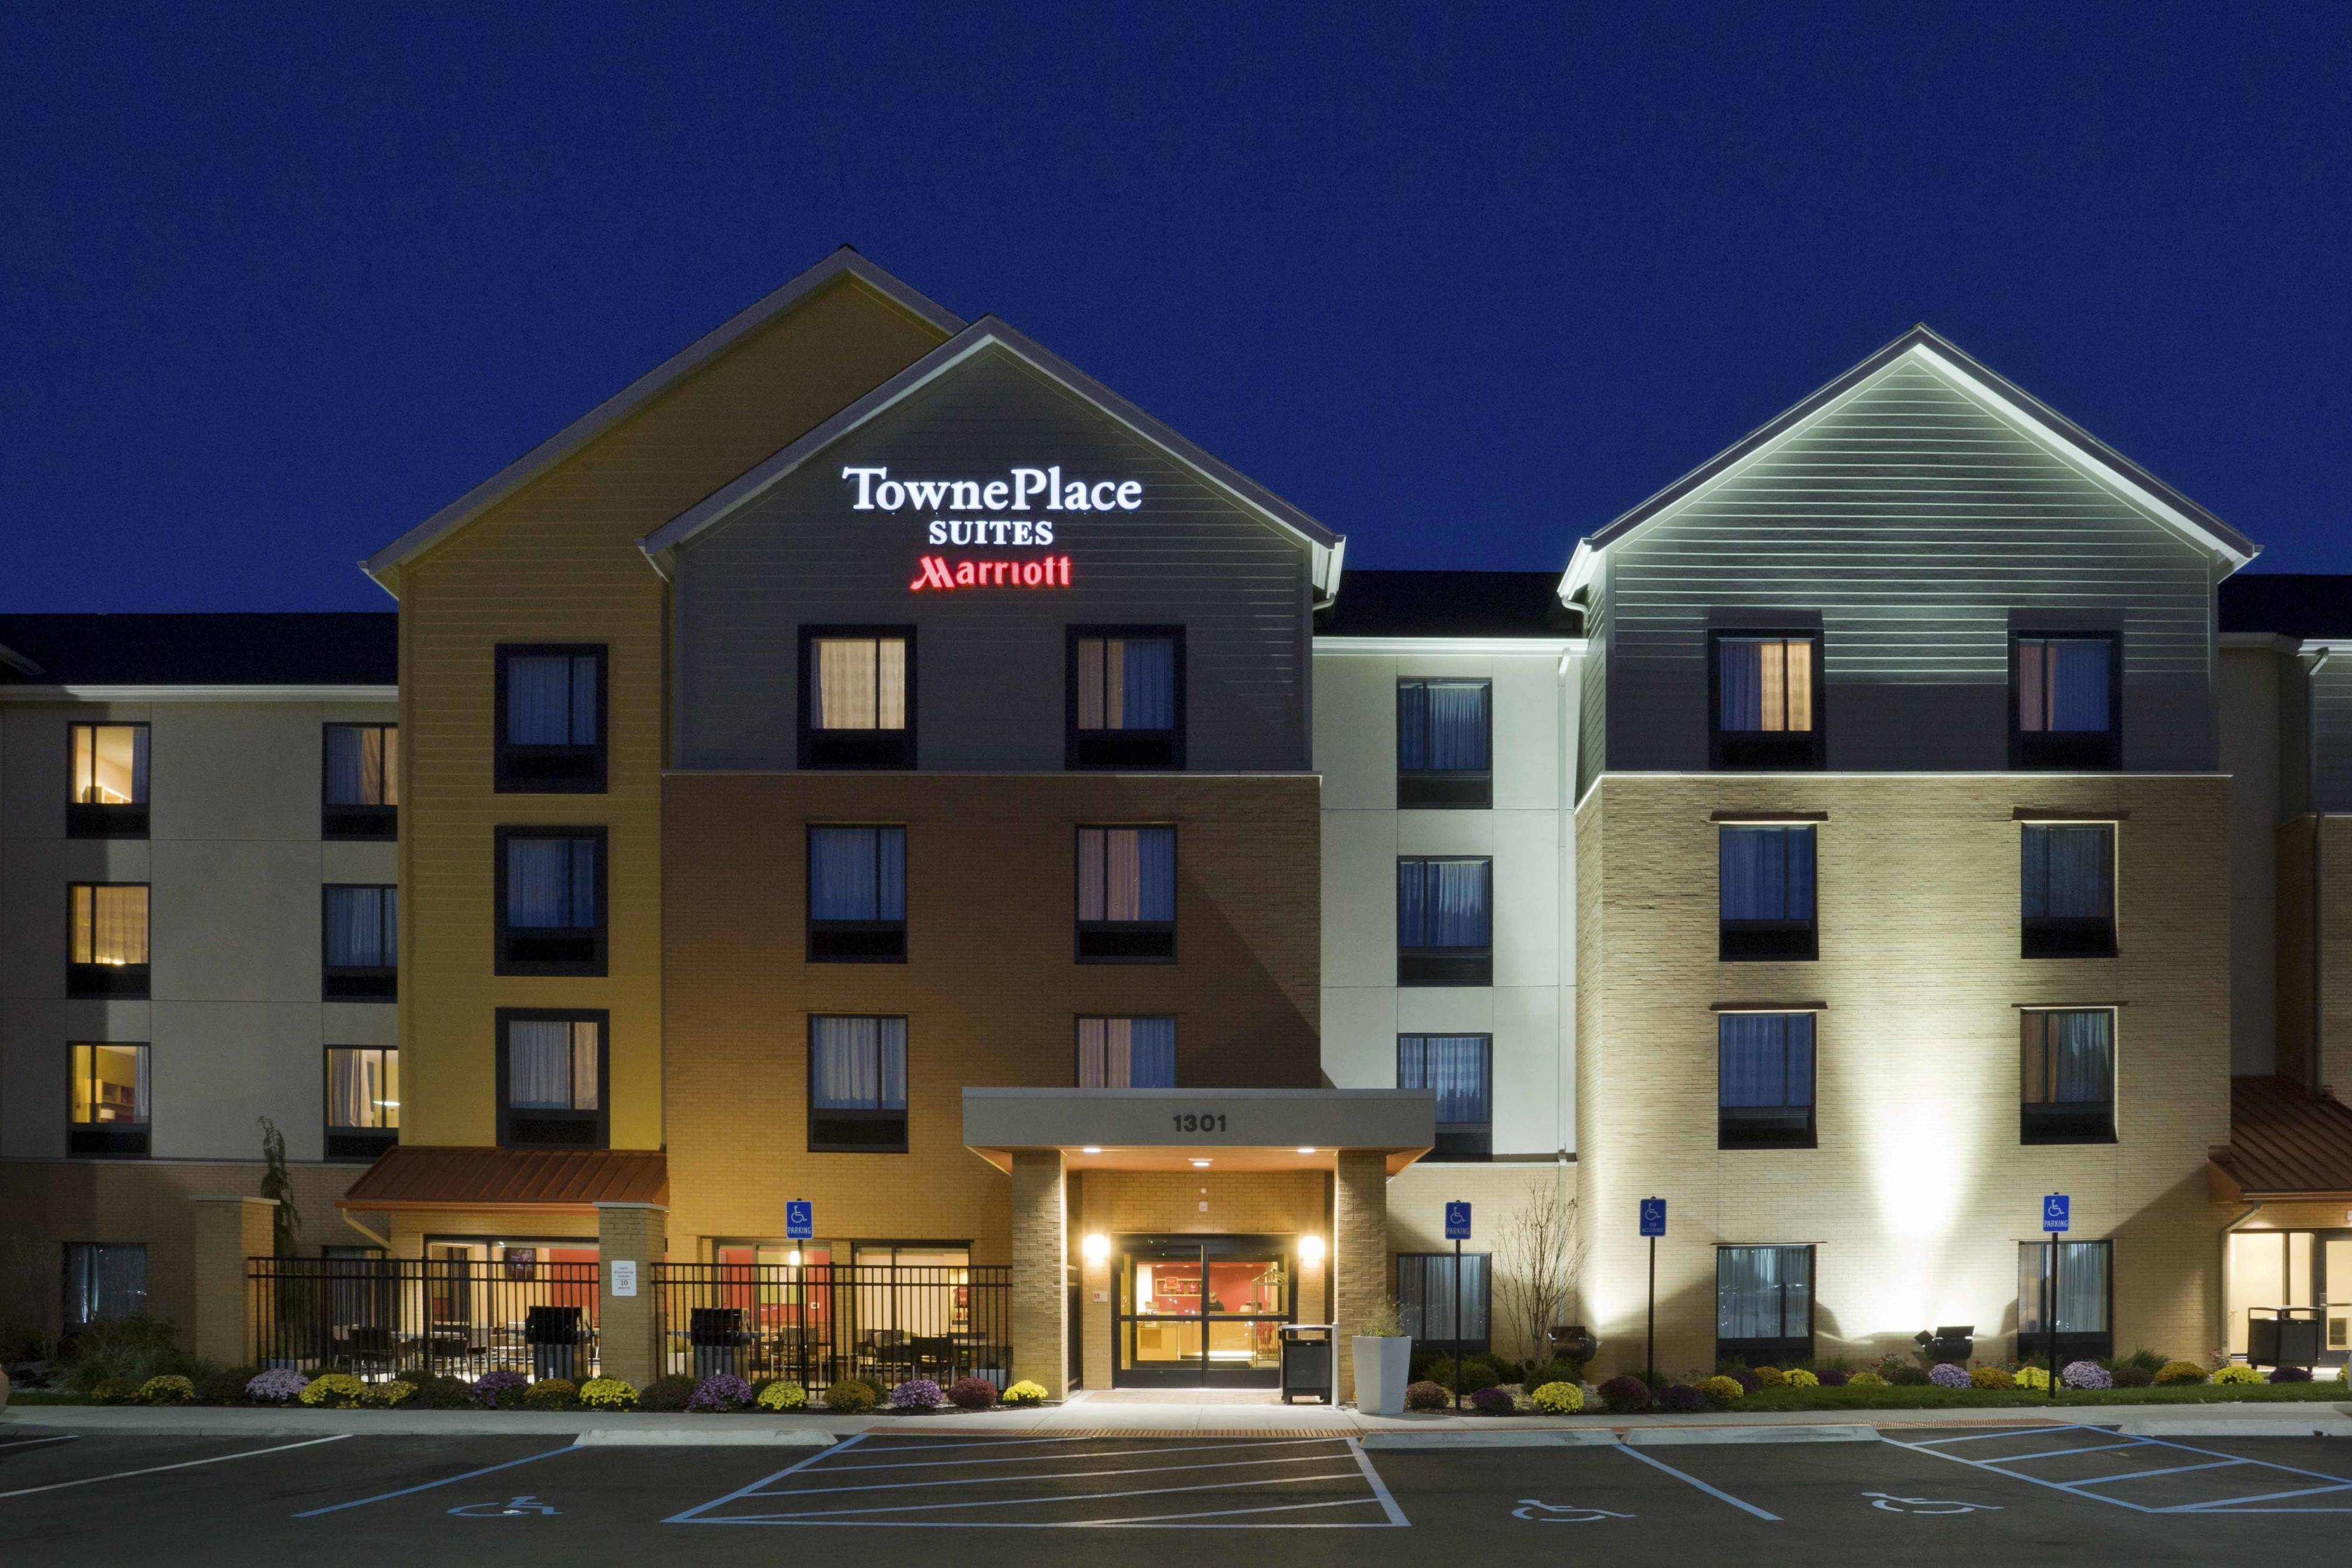 Photo of TownePlace Suites by Marriott Ann Arbor, Ann Arbor, MI